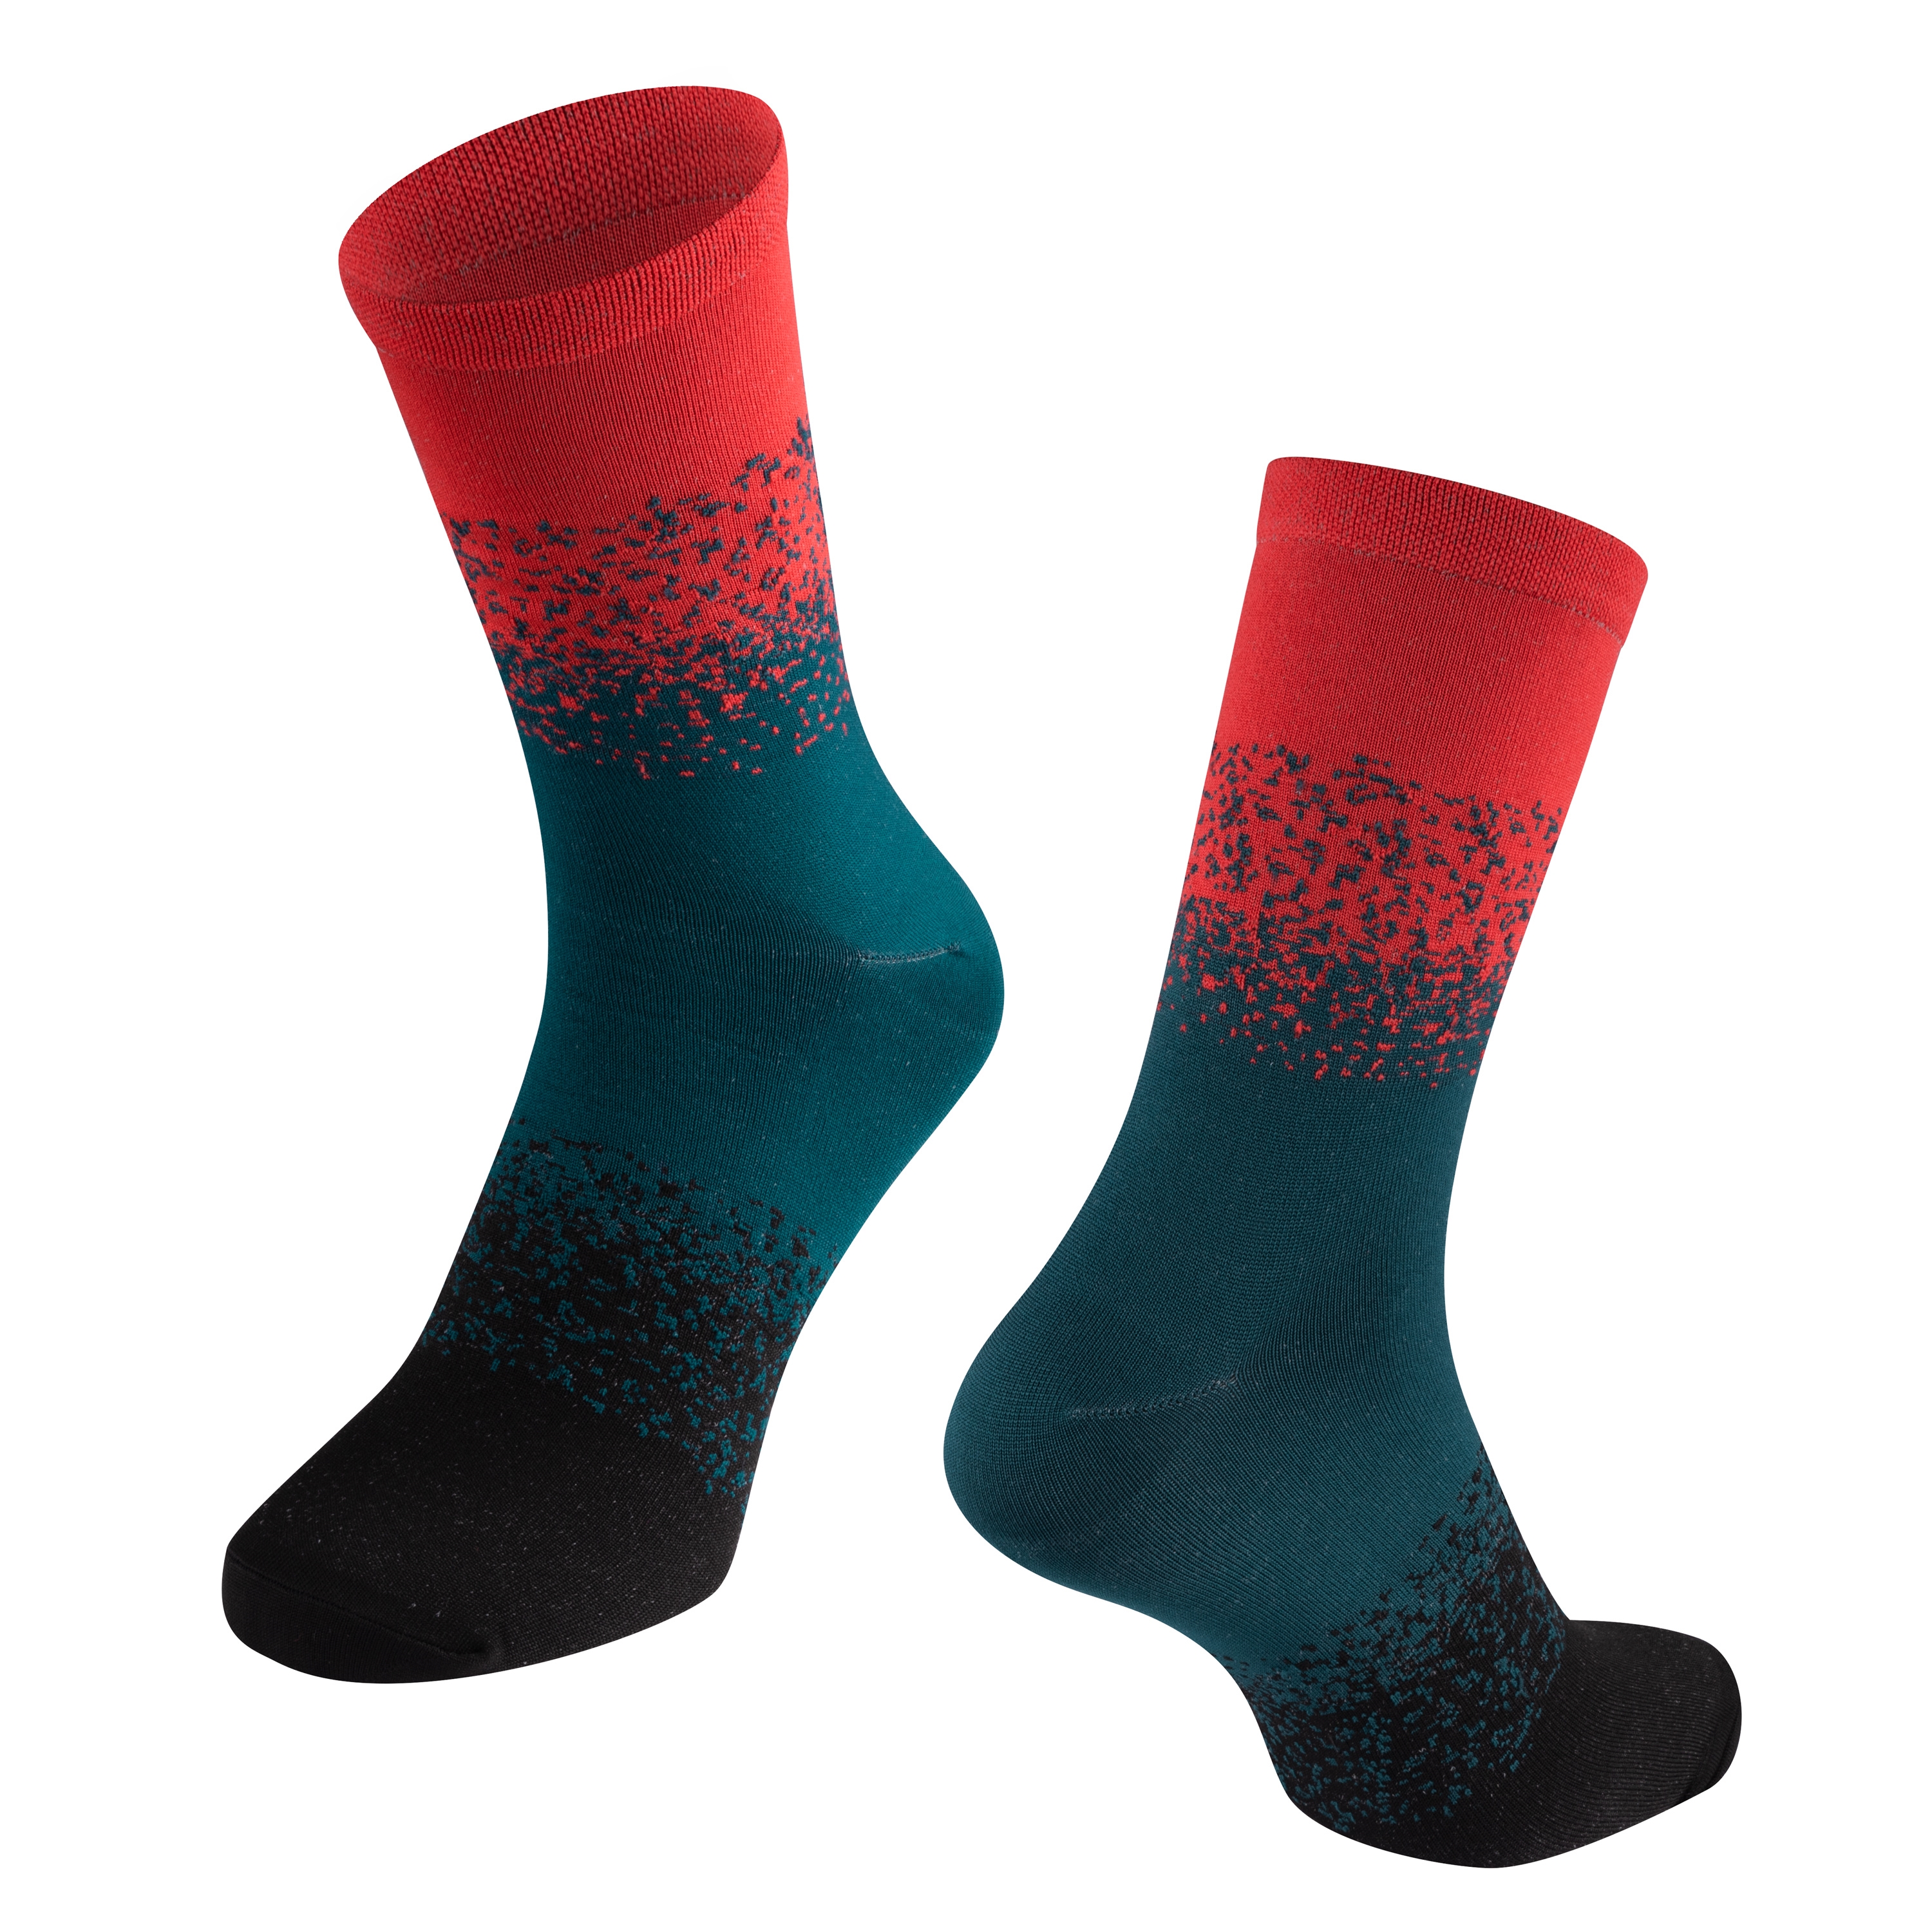 ponožky FORCE ETHOS, červeno-zelené L-XL/42-46